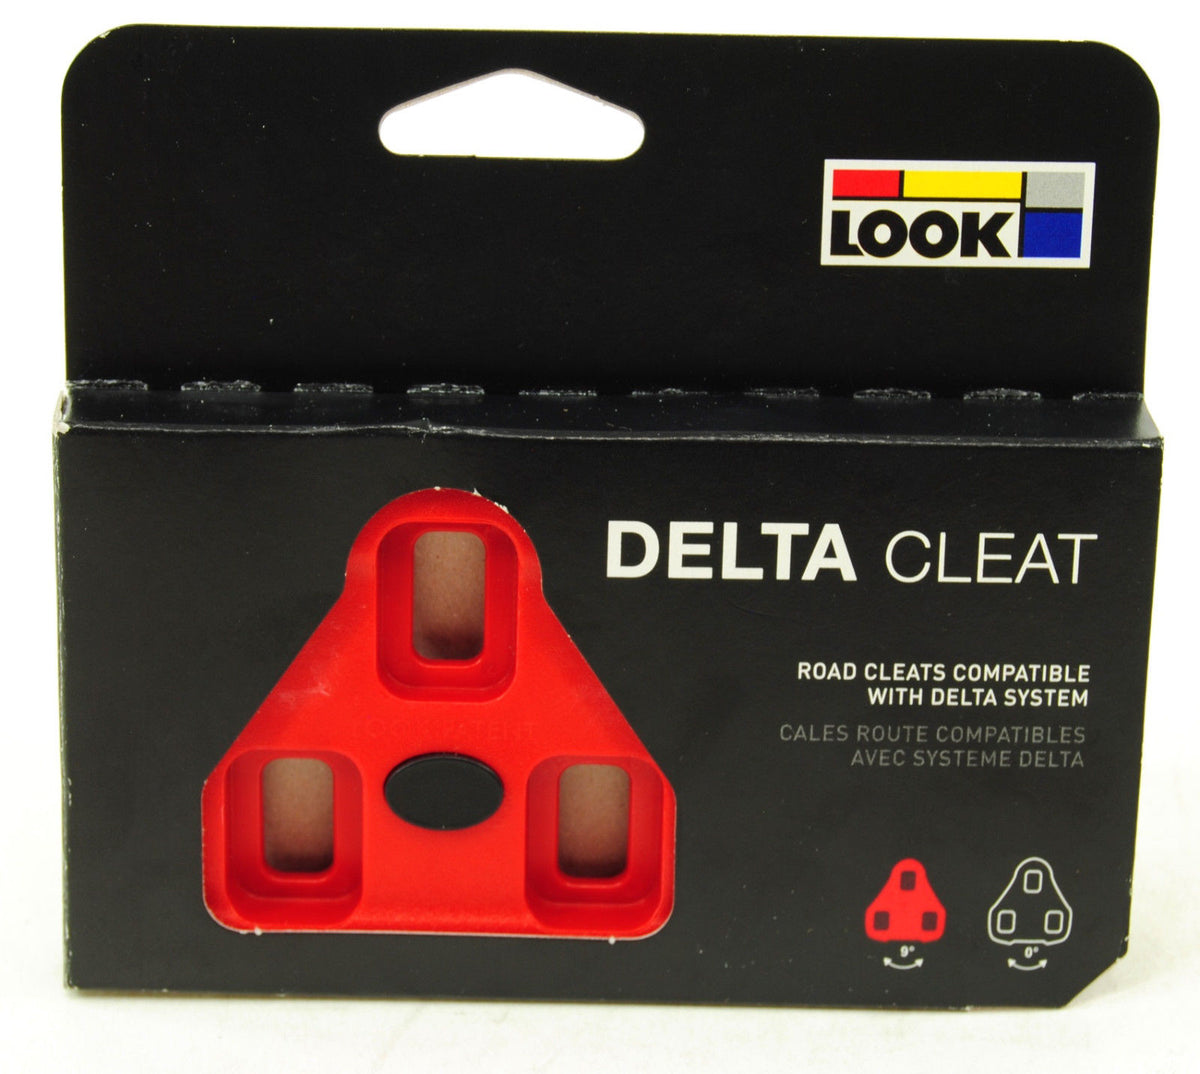 LOOK Delta Cleat